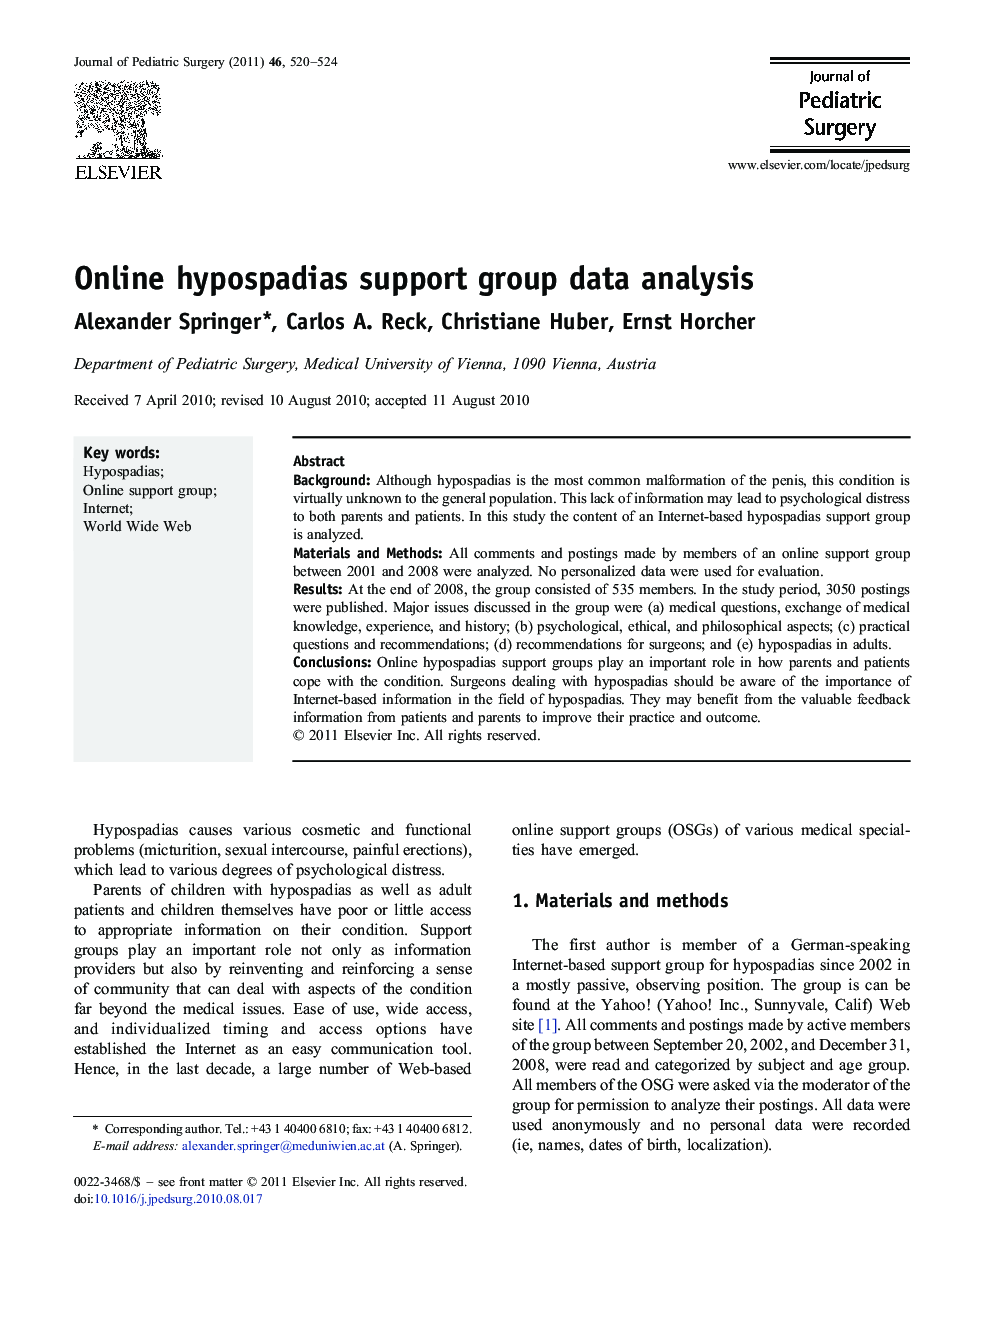 Online hypospadias support group data analysis